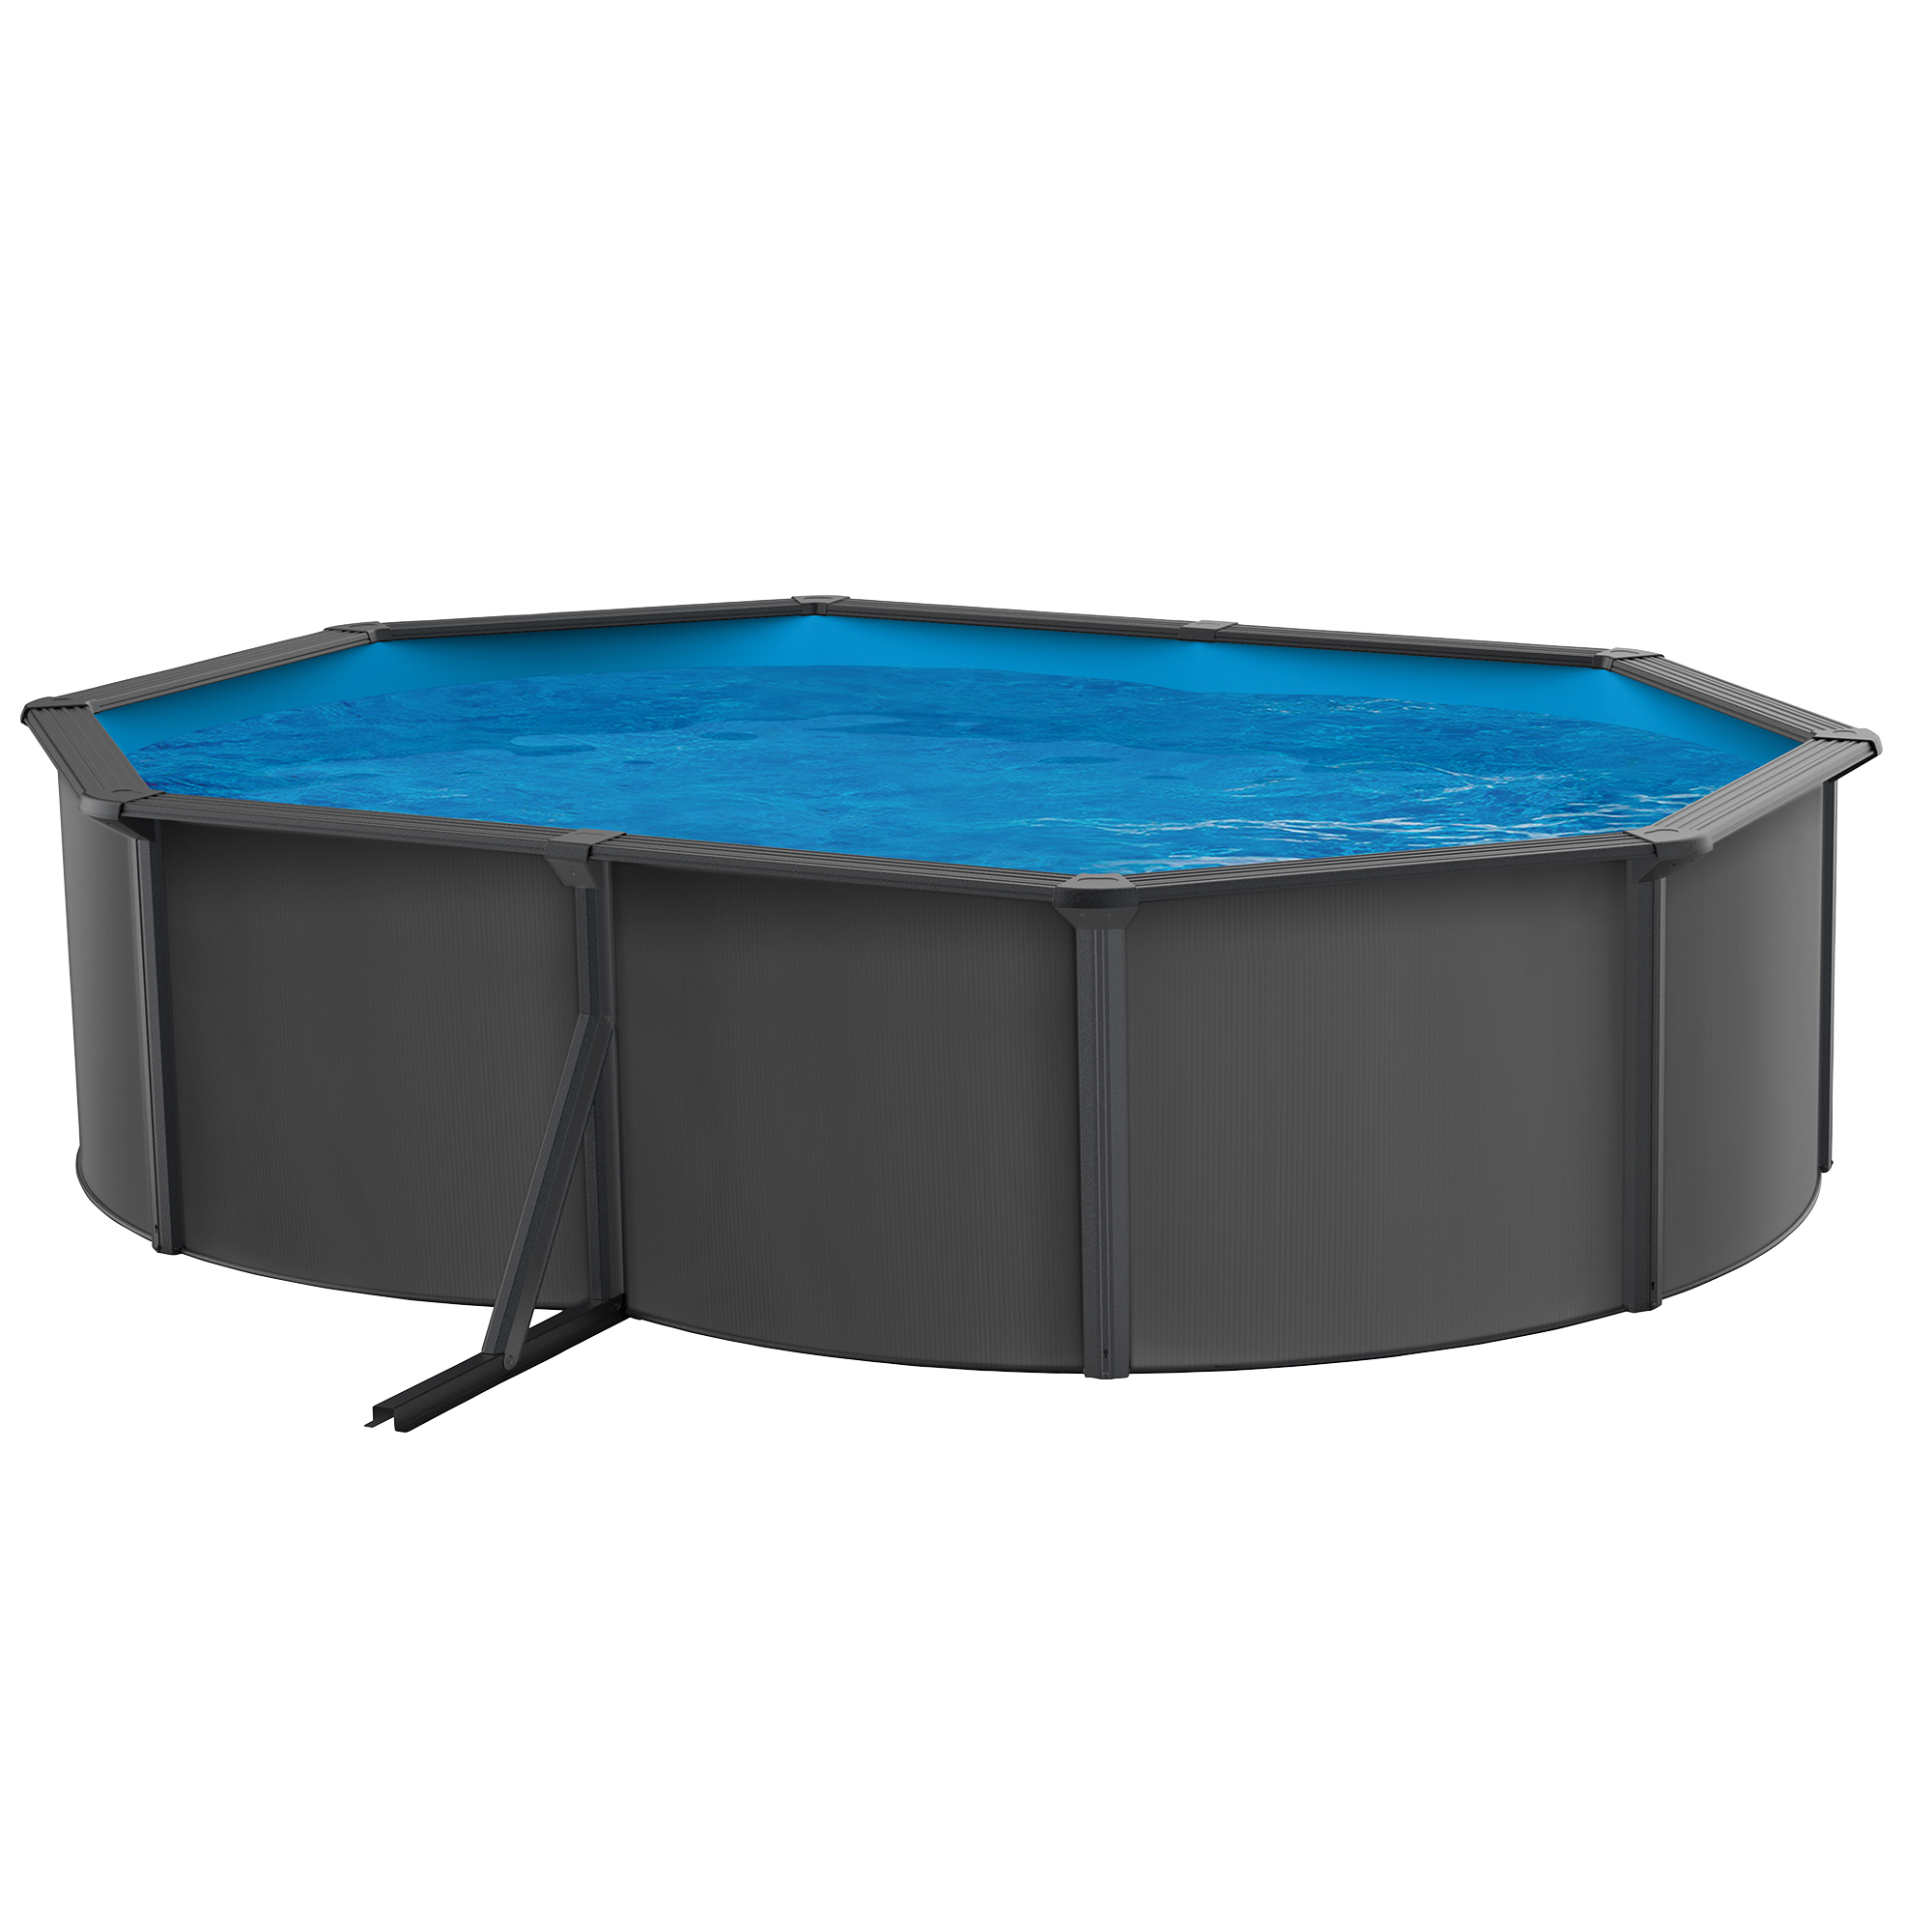 SWIM & FUN Basic Pool, x 120 360 Oval Grey cm, 490 Pool x Anthracite Grau